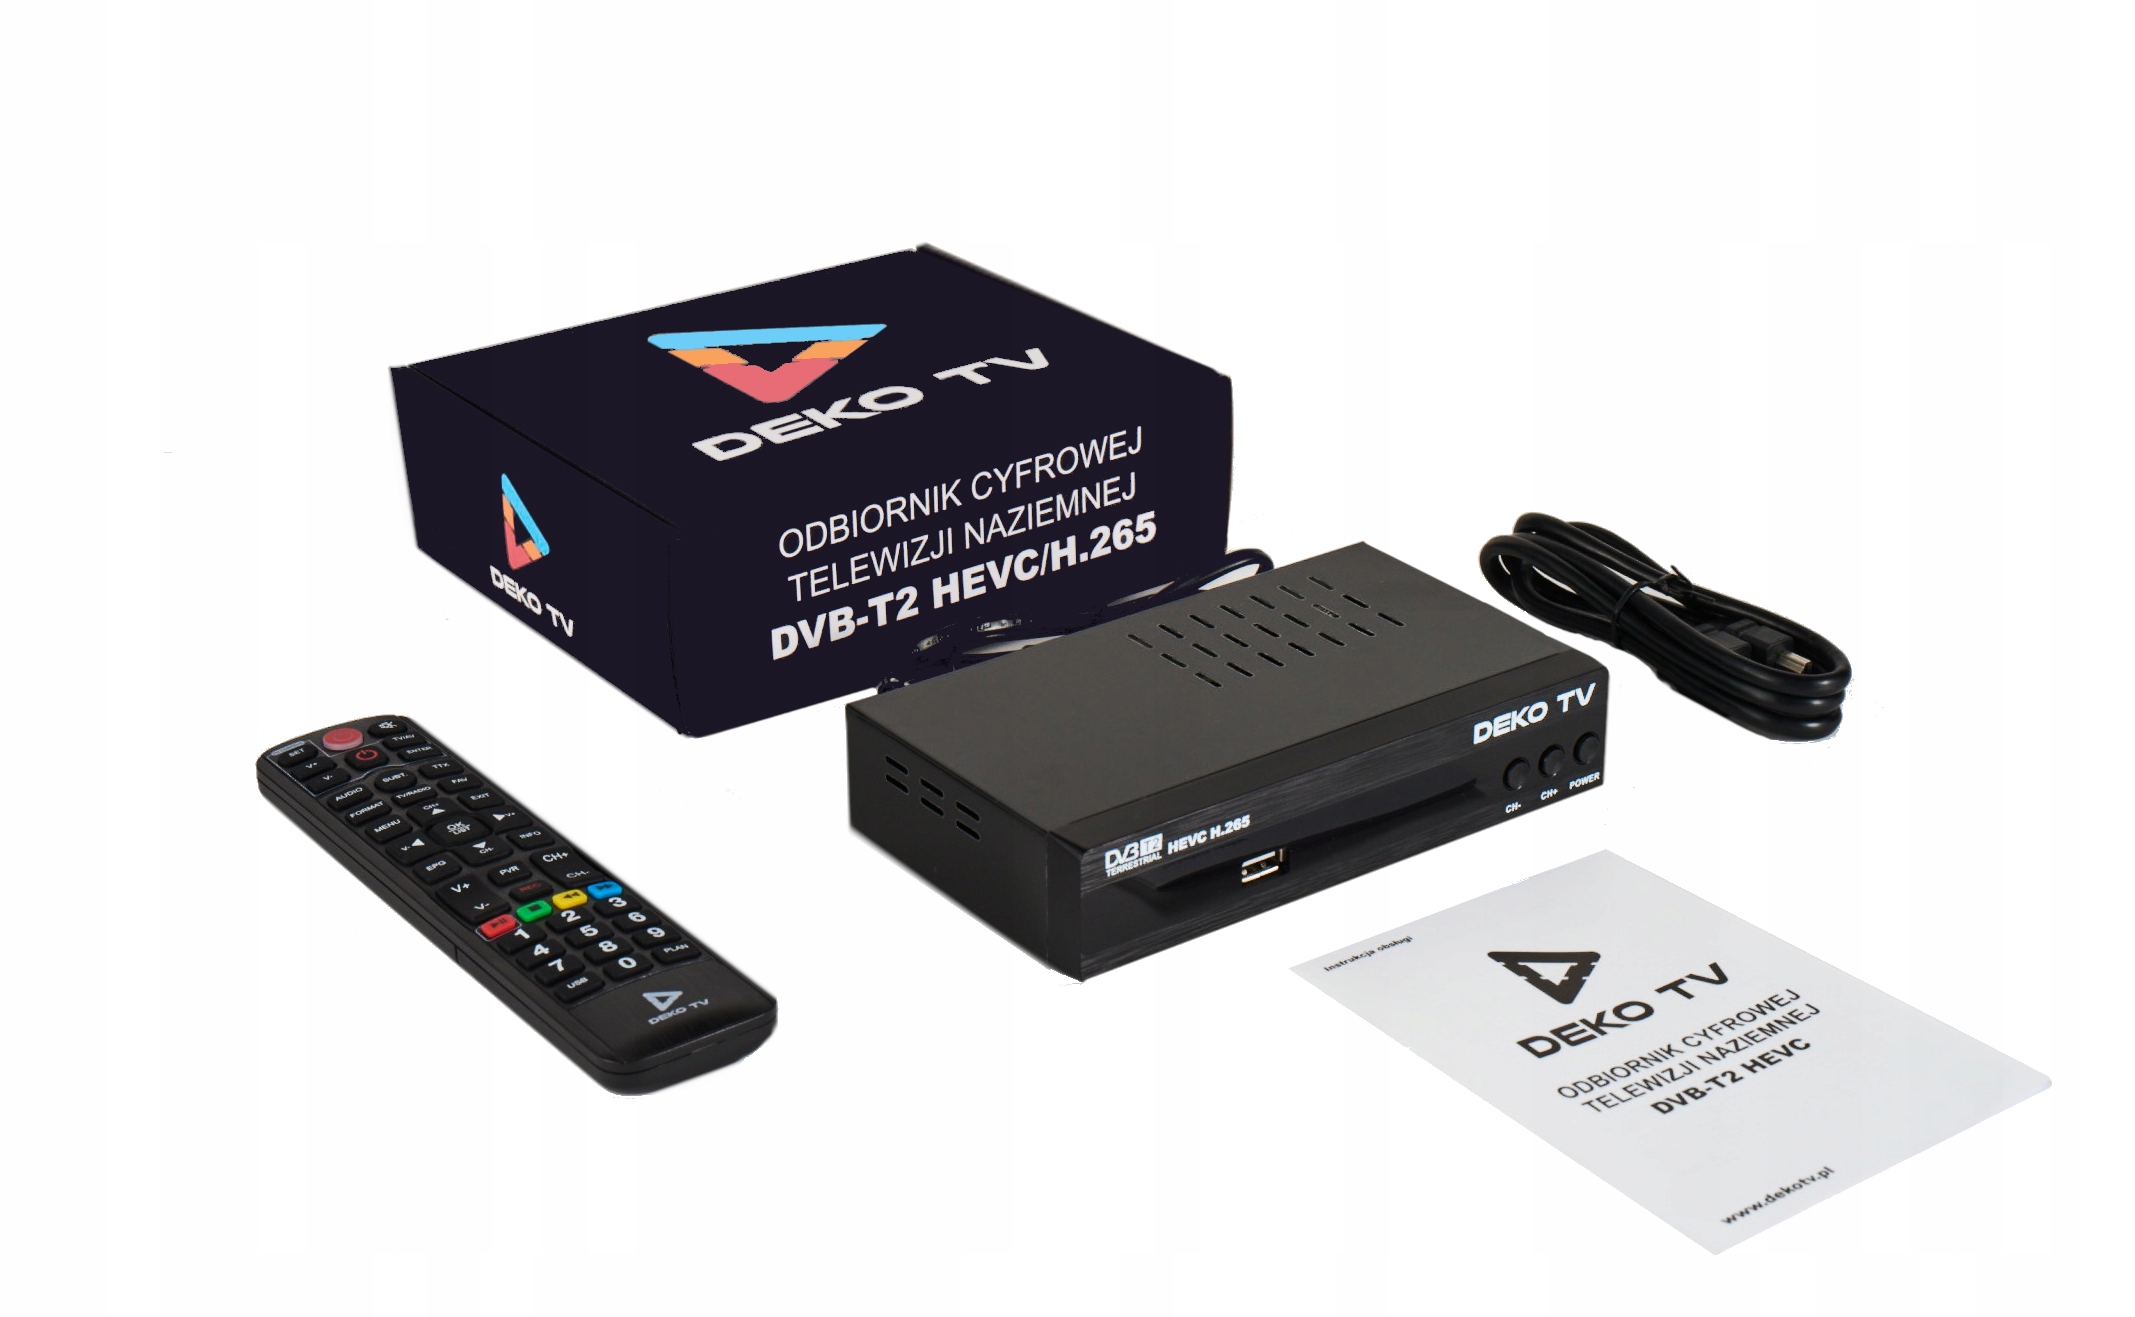 DVB-T2 DekoTV PRO HEVC H.265 DVBT2 decoder Manufacturer code H.265 PRO